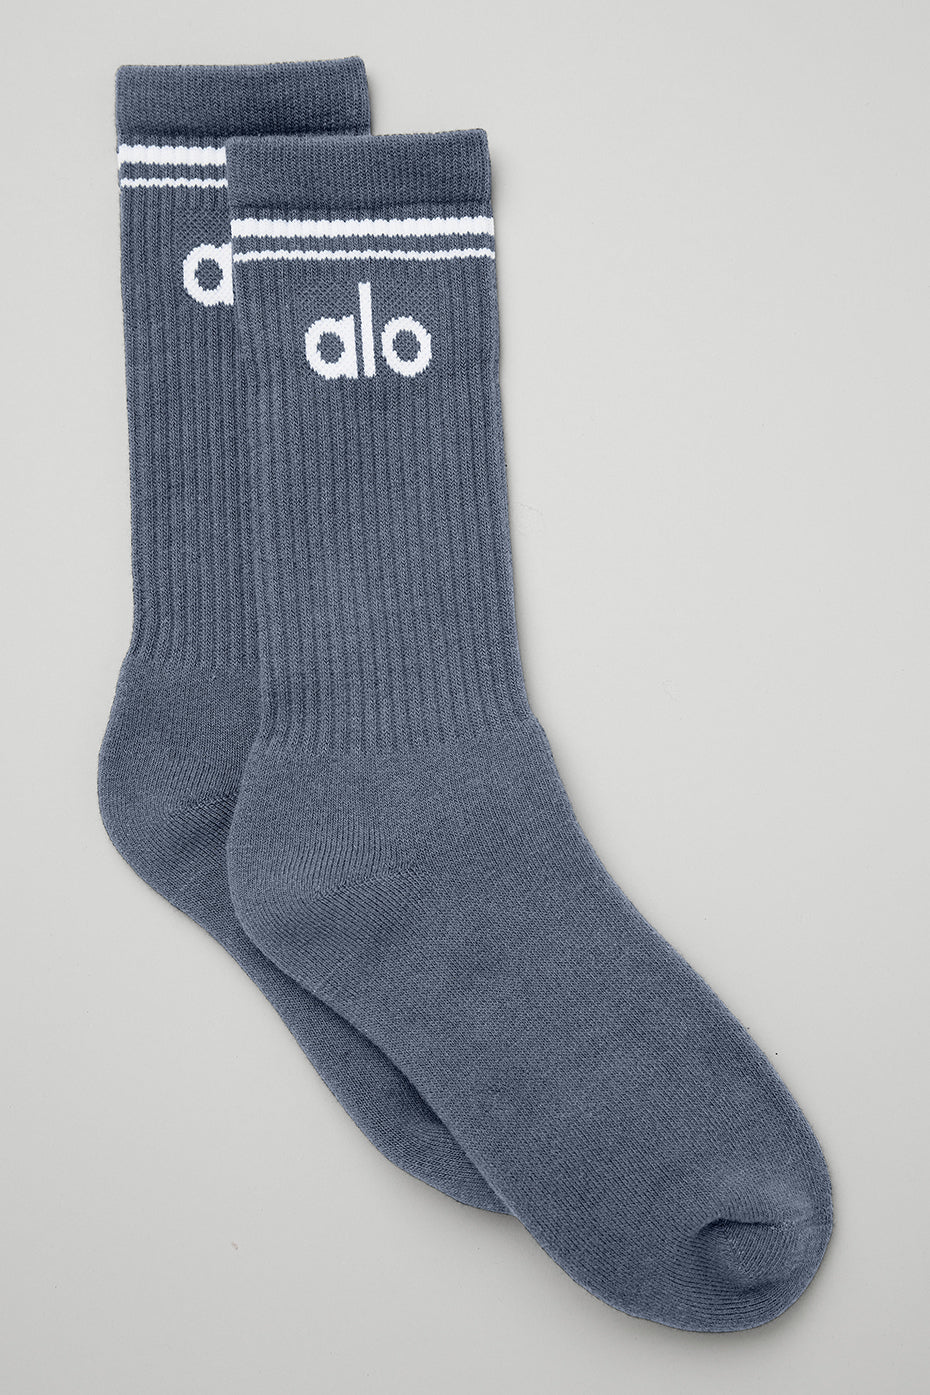 Alo Crew Socks